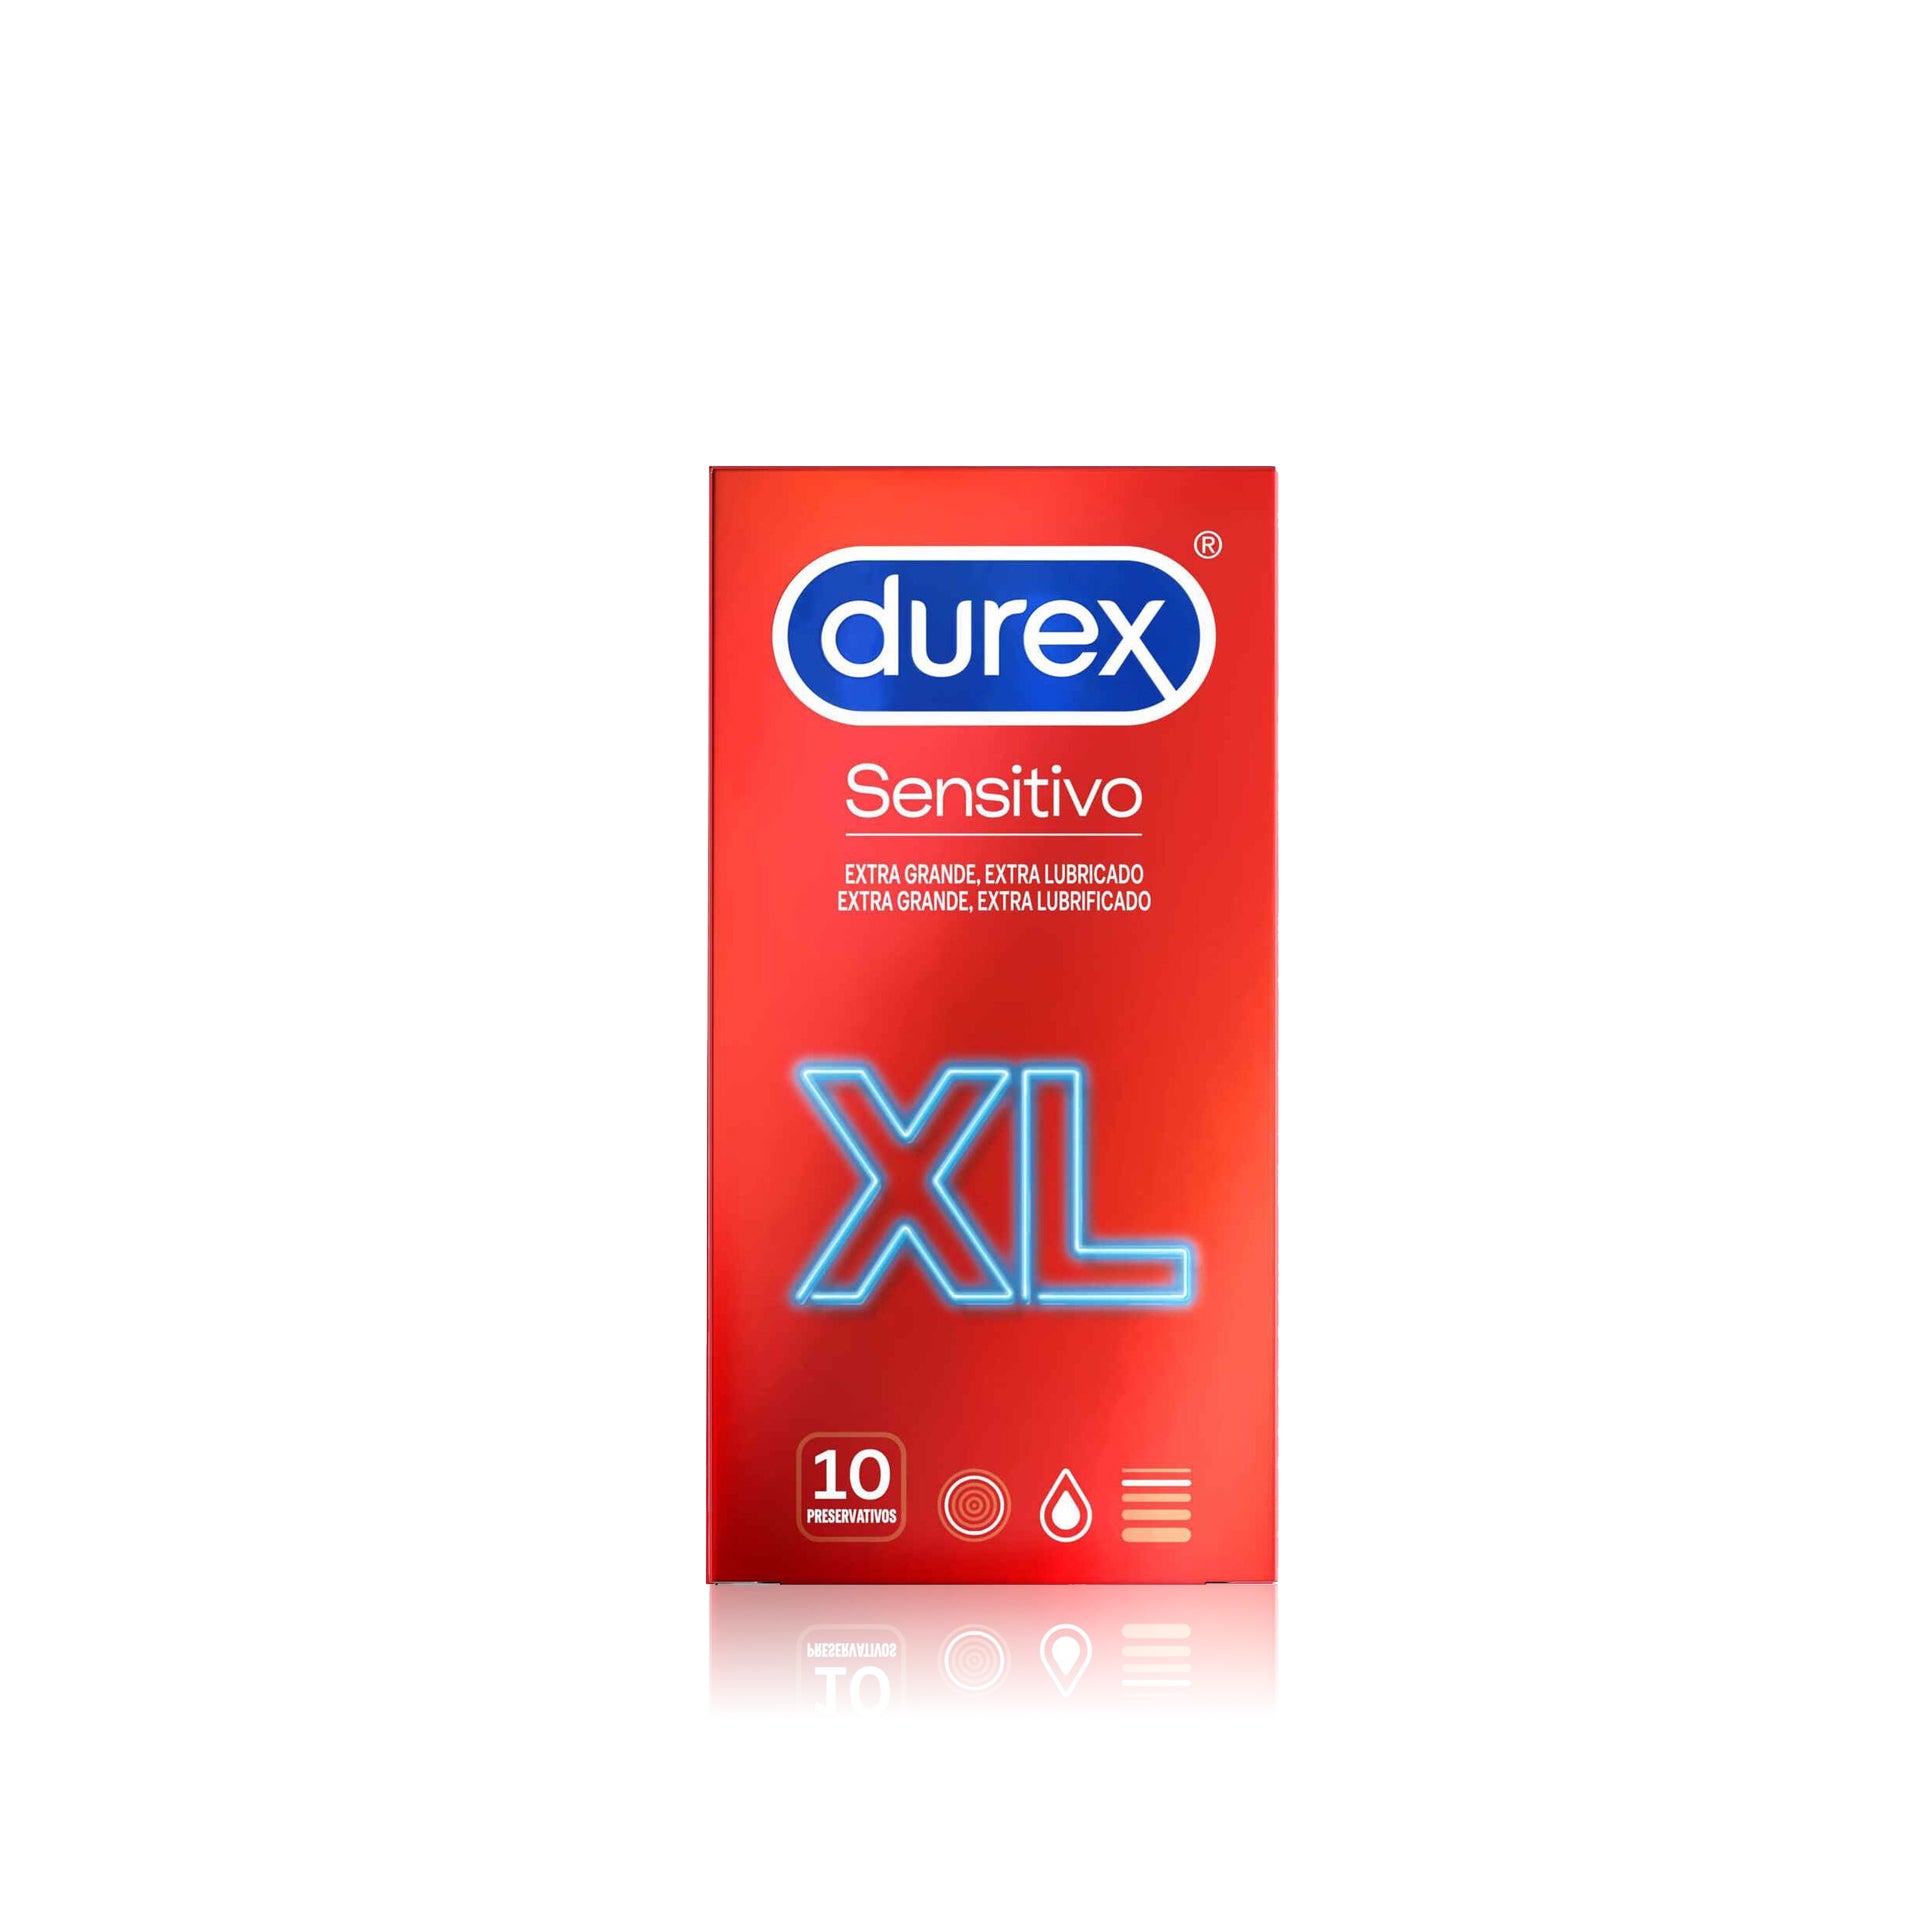 Durex Sensitive Preservativos XL 10uds